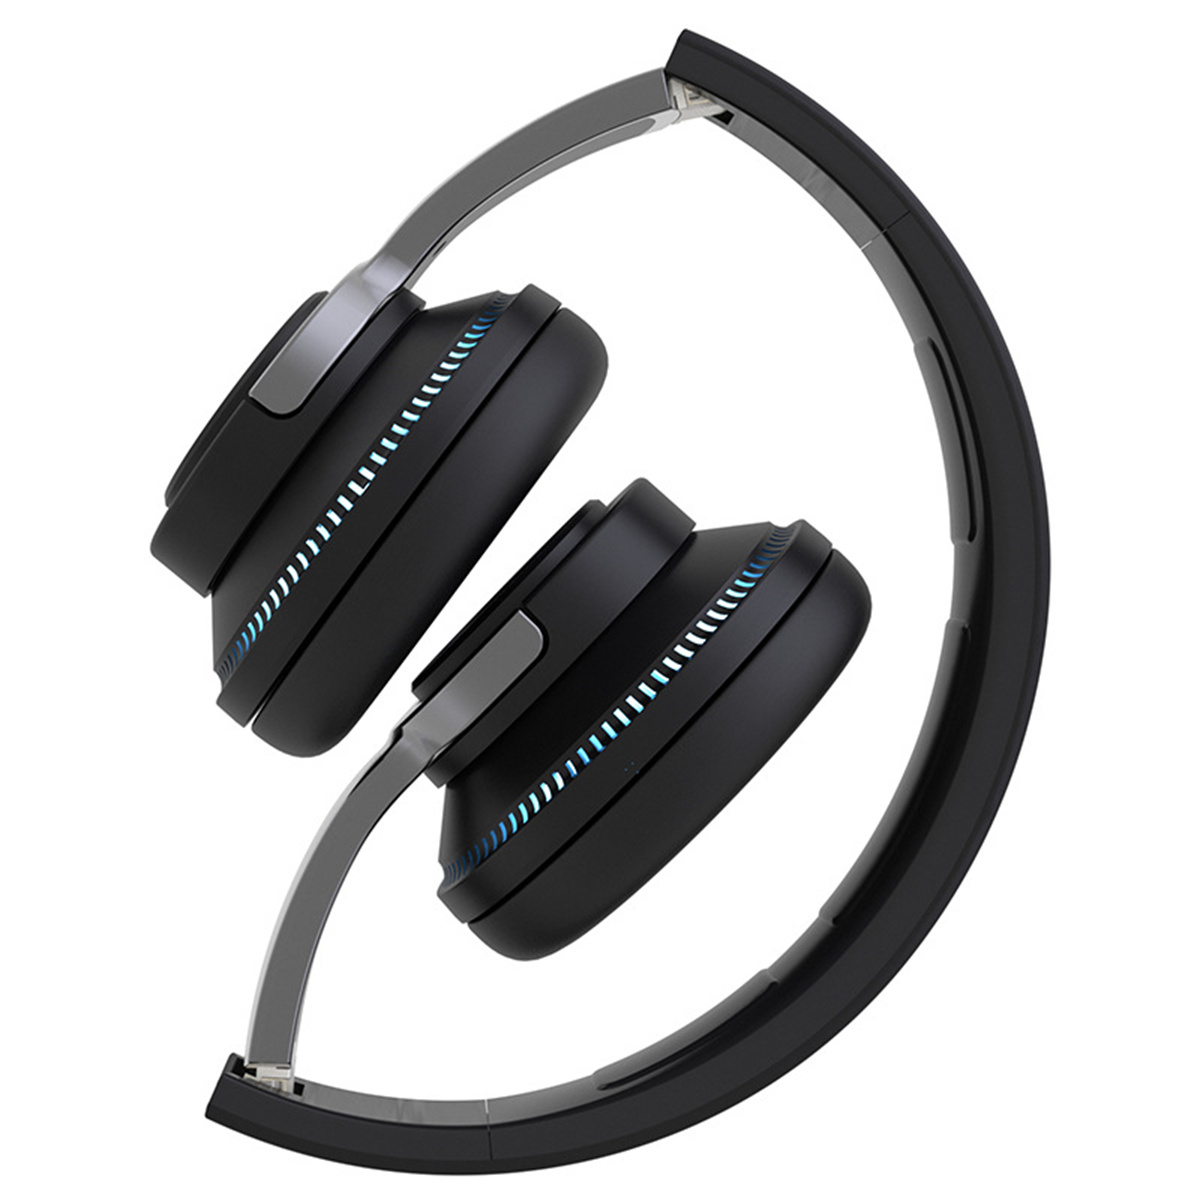 SYNTEK Glow Bluetooth-Headset Headset, Blau Stirnband Wireless Bass Bluetooth Over-ear Blau Kopfhörer Folding